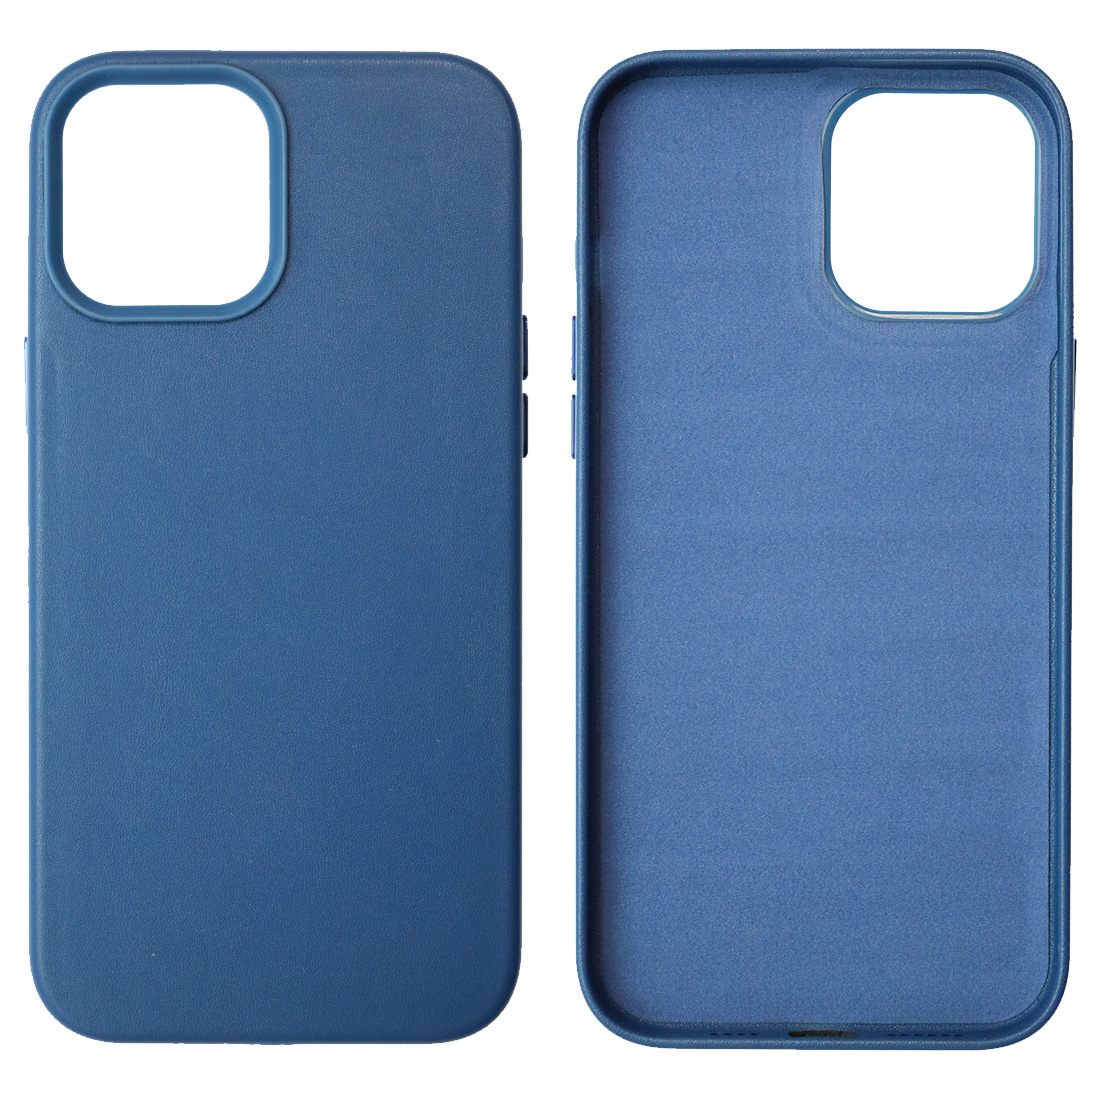 Чехол накладка Leather Case для APPLE iPhone 12 Pro Max, силикон, бархат, экокожа, цвет королевский синий